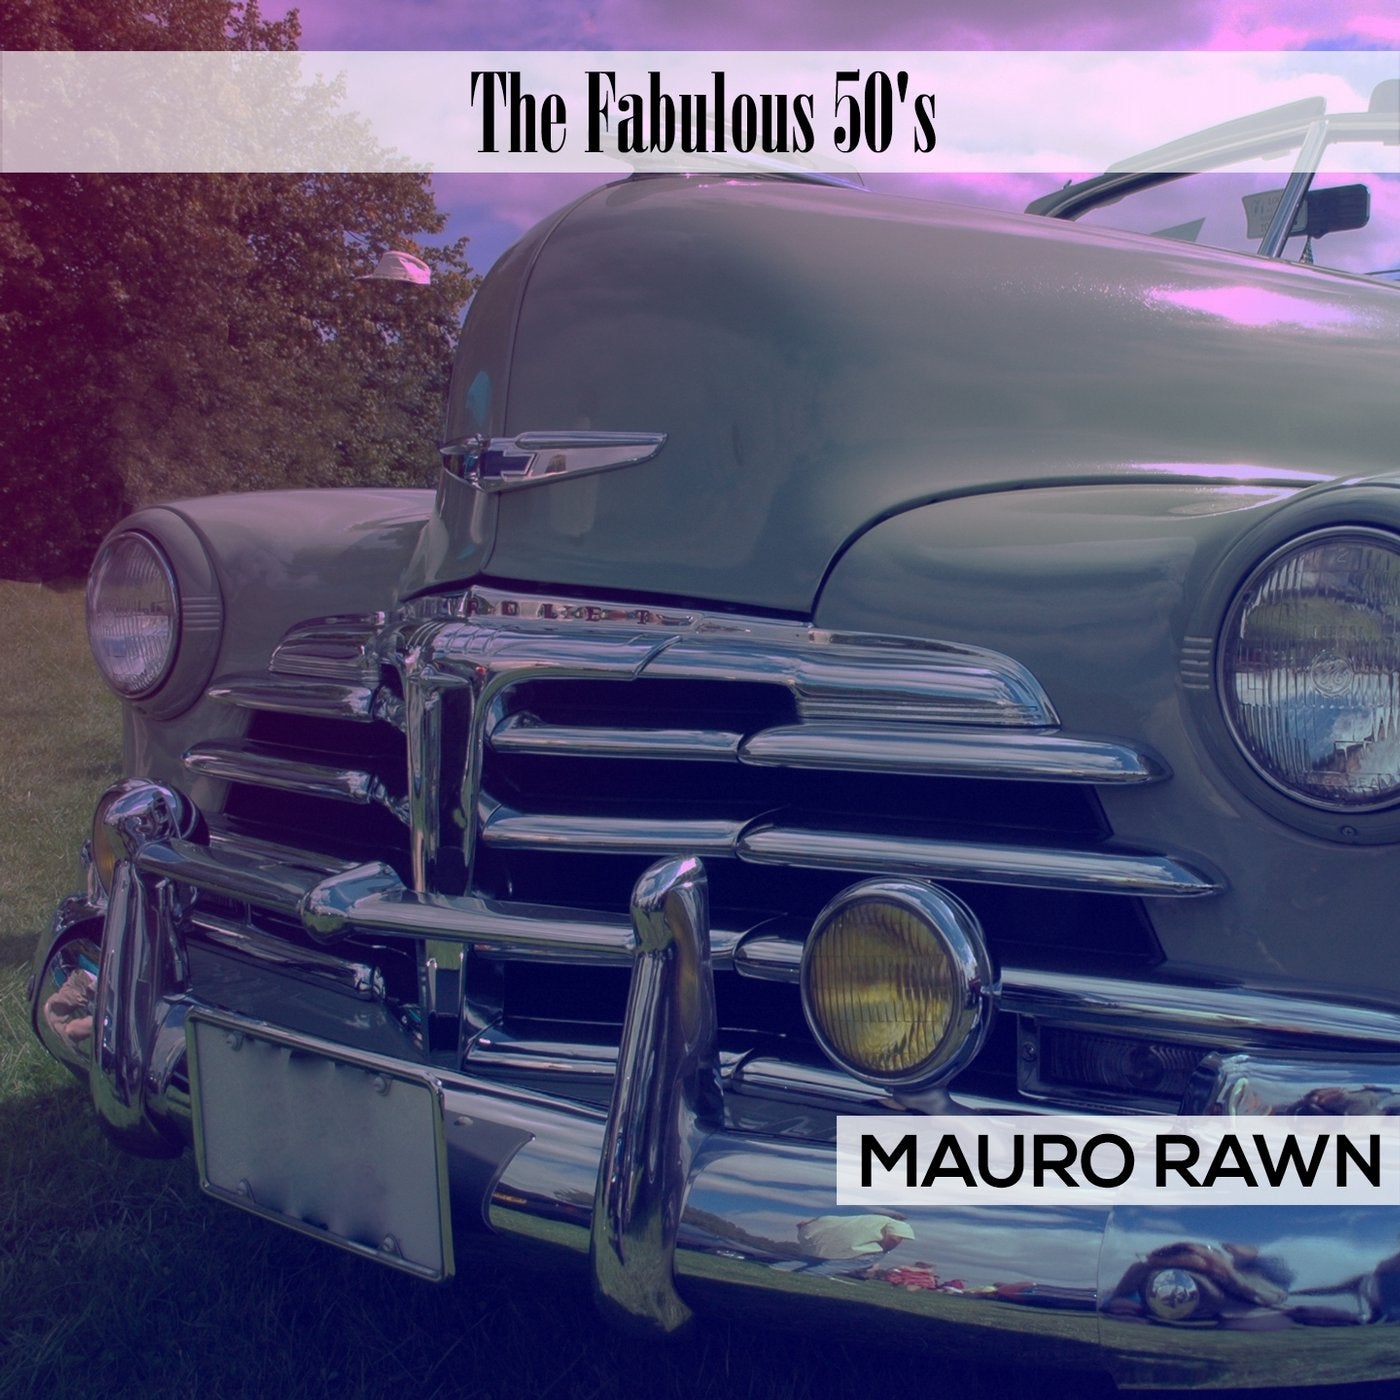 The Fabulous 50's